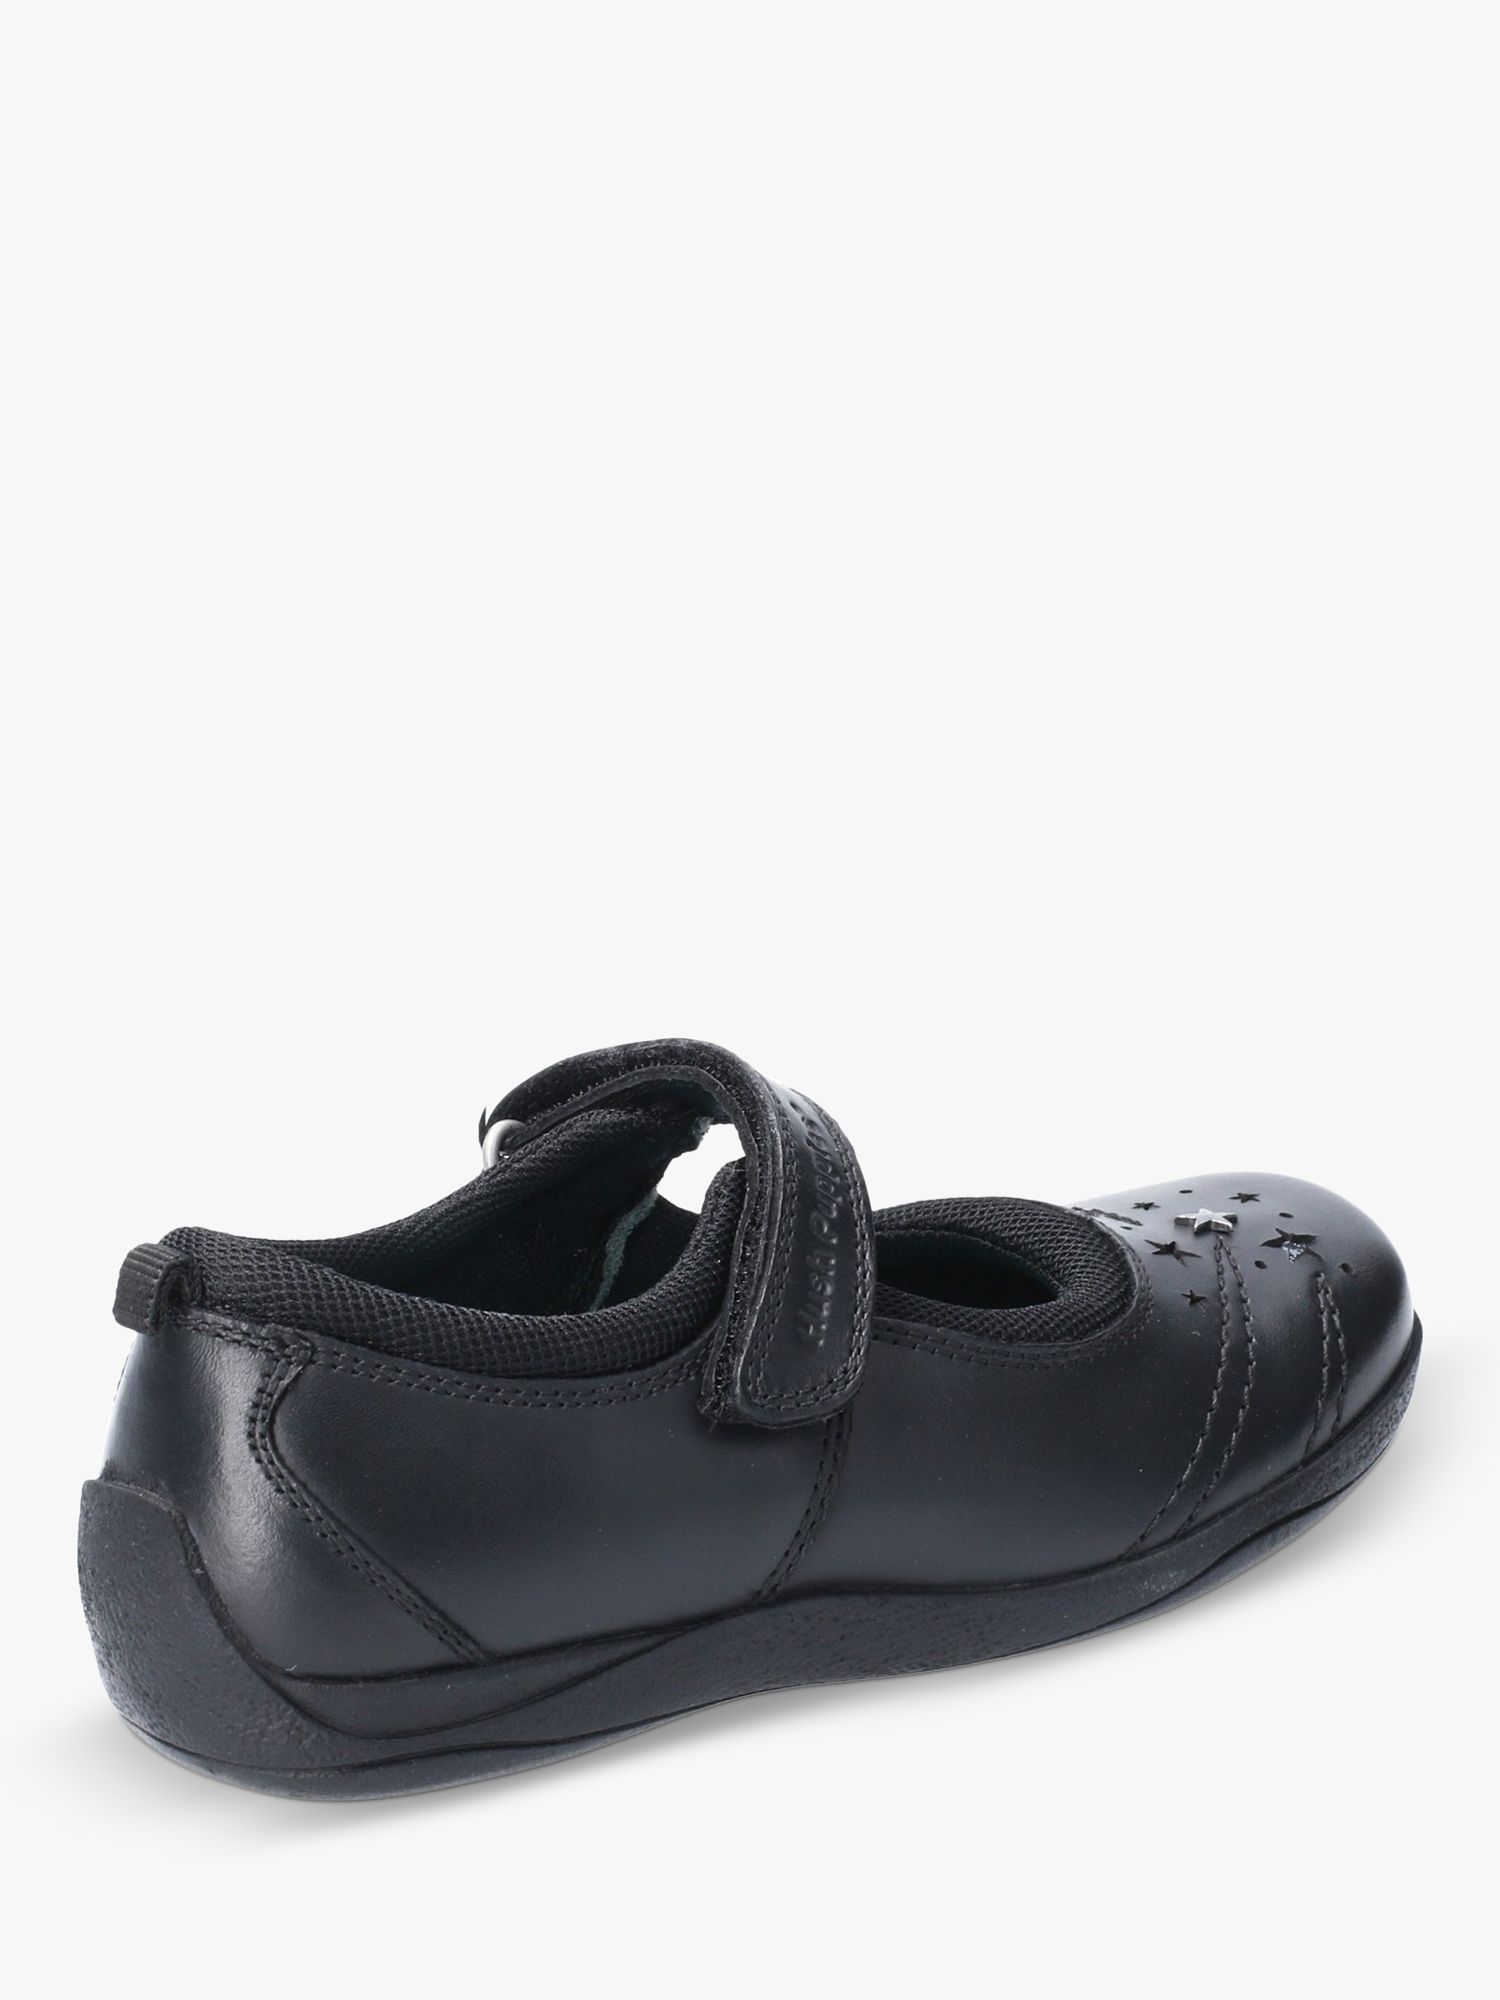 Hush Puppies Kids' Amber Senior Leather School Shoes, Black, 3